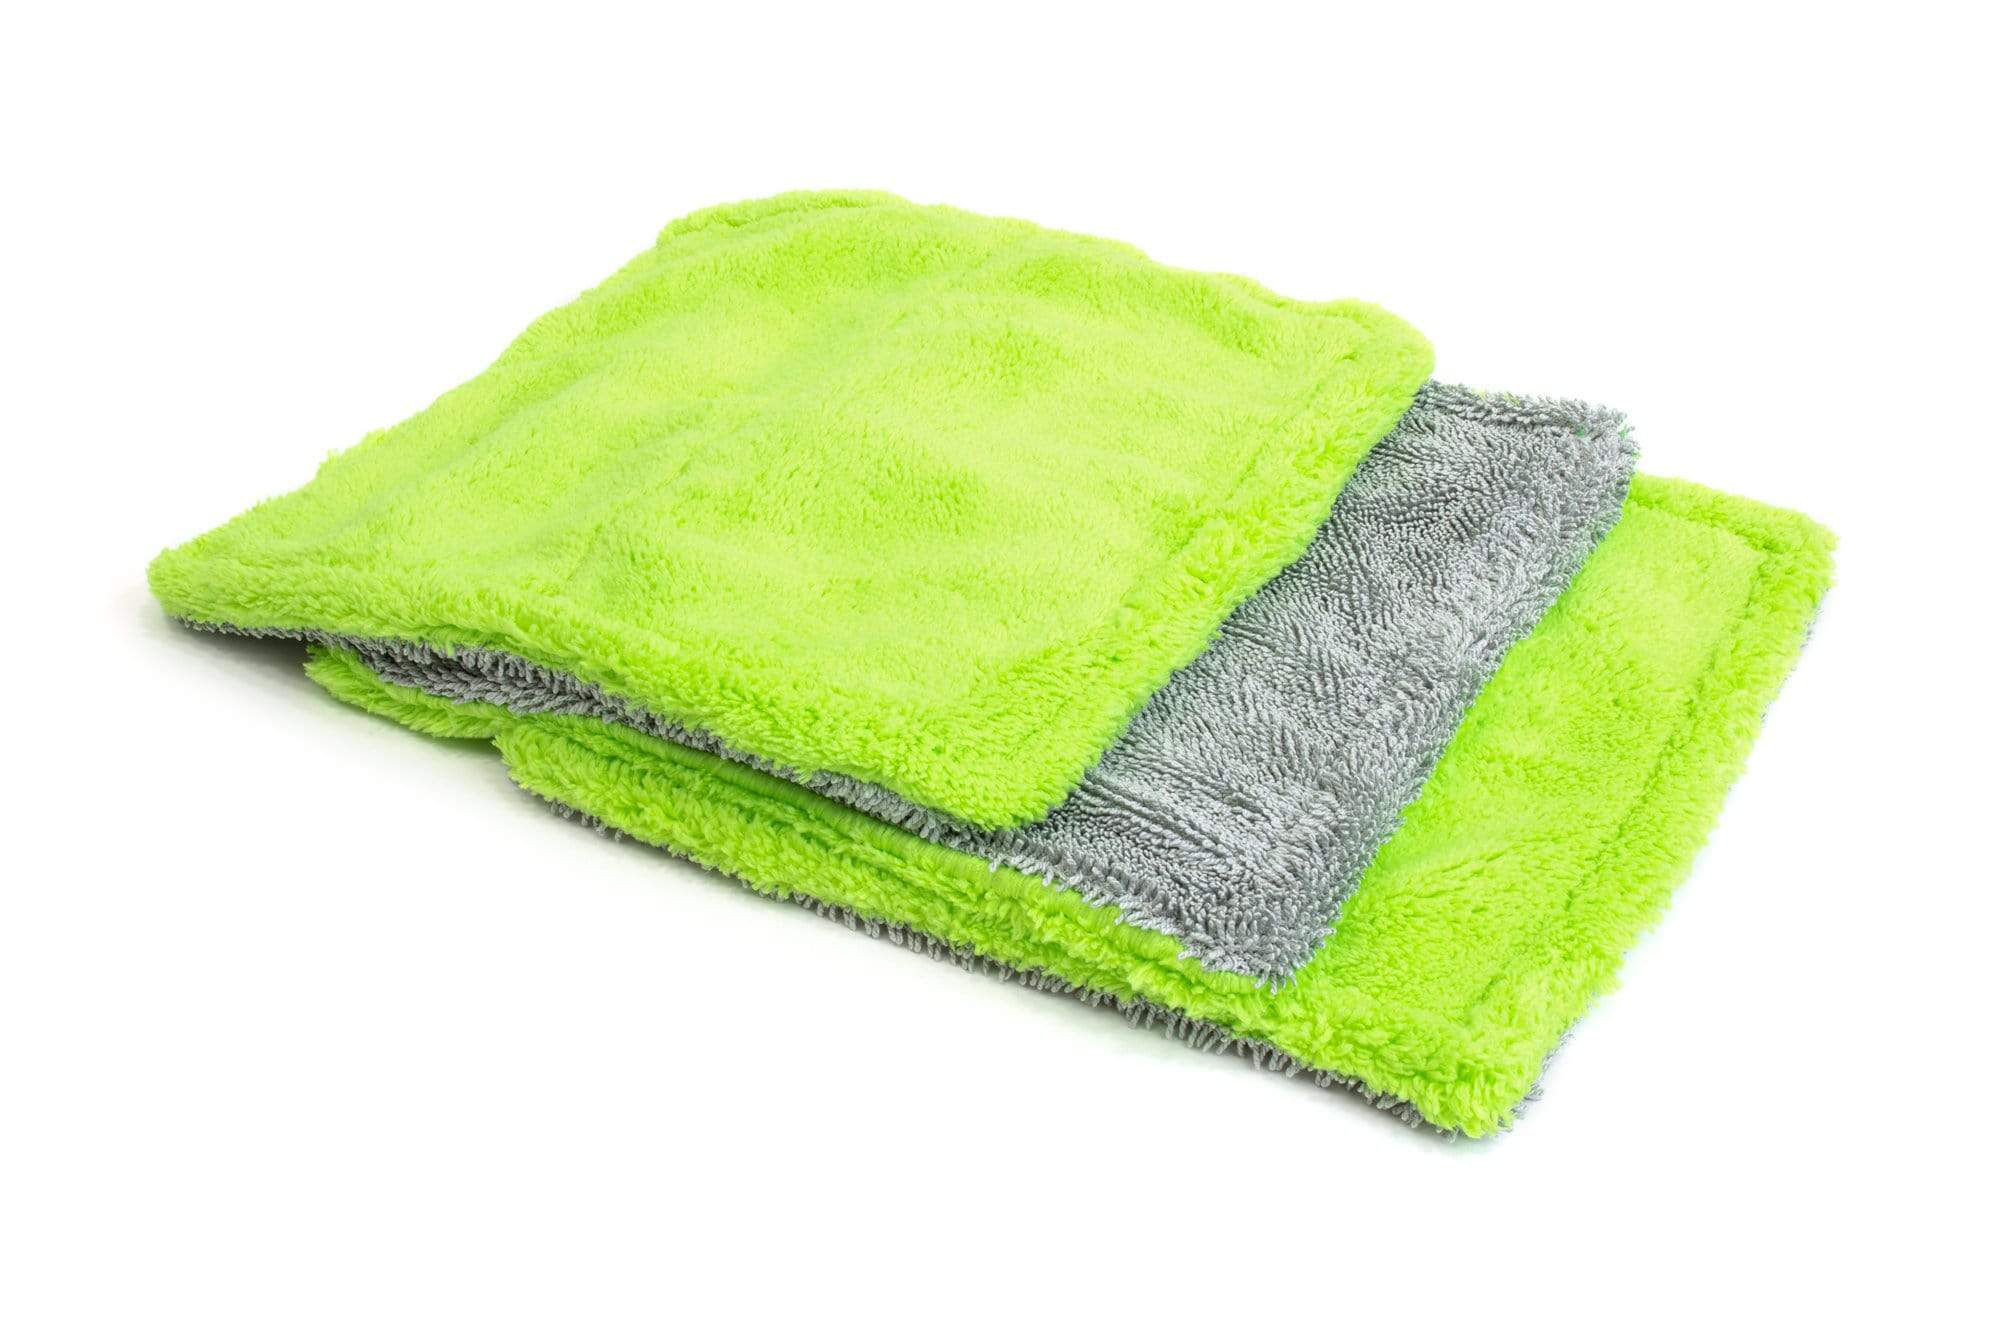 [Bug/Decon Flip] Bug & Decontamination Microfiber Mesh Scrubbing Towel  8x8 Gold - 3 Pack